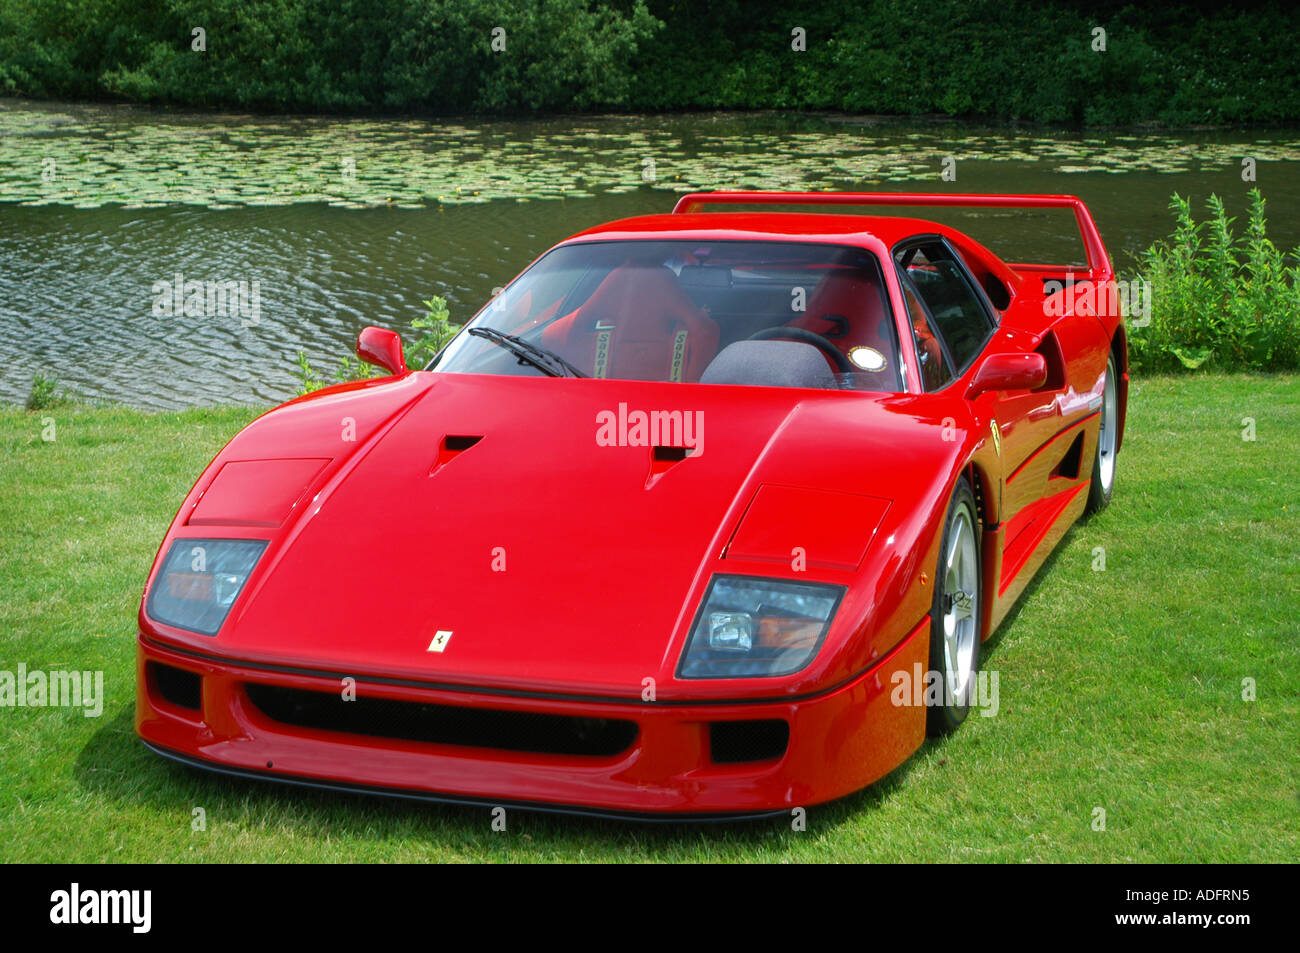 Red Ferrari F40 sports car. Stock Photo